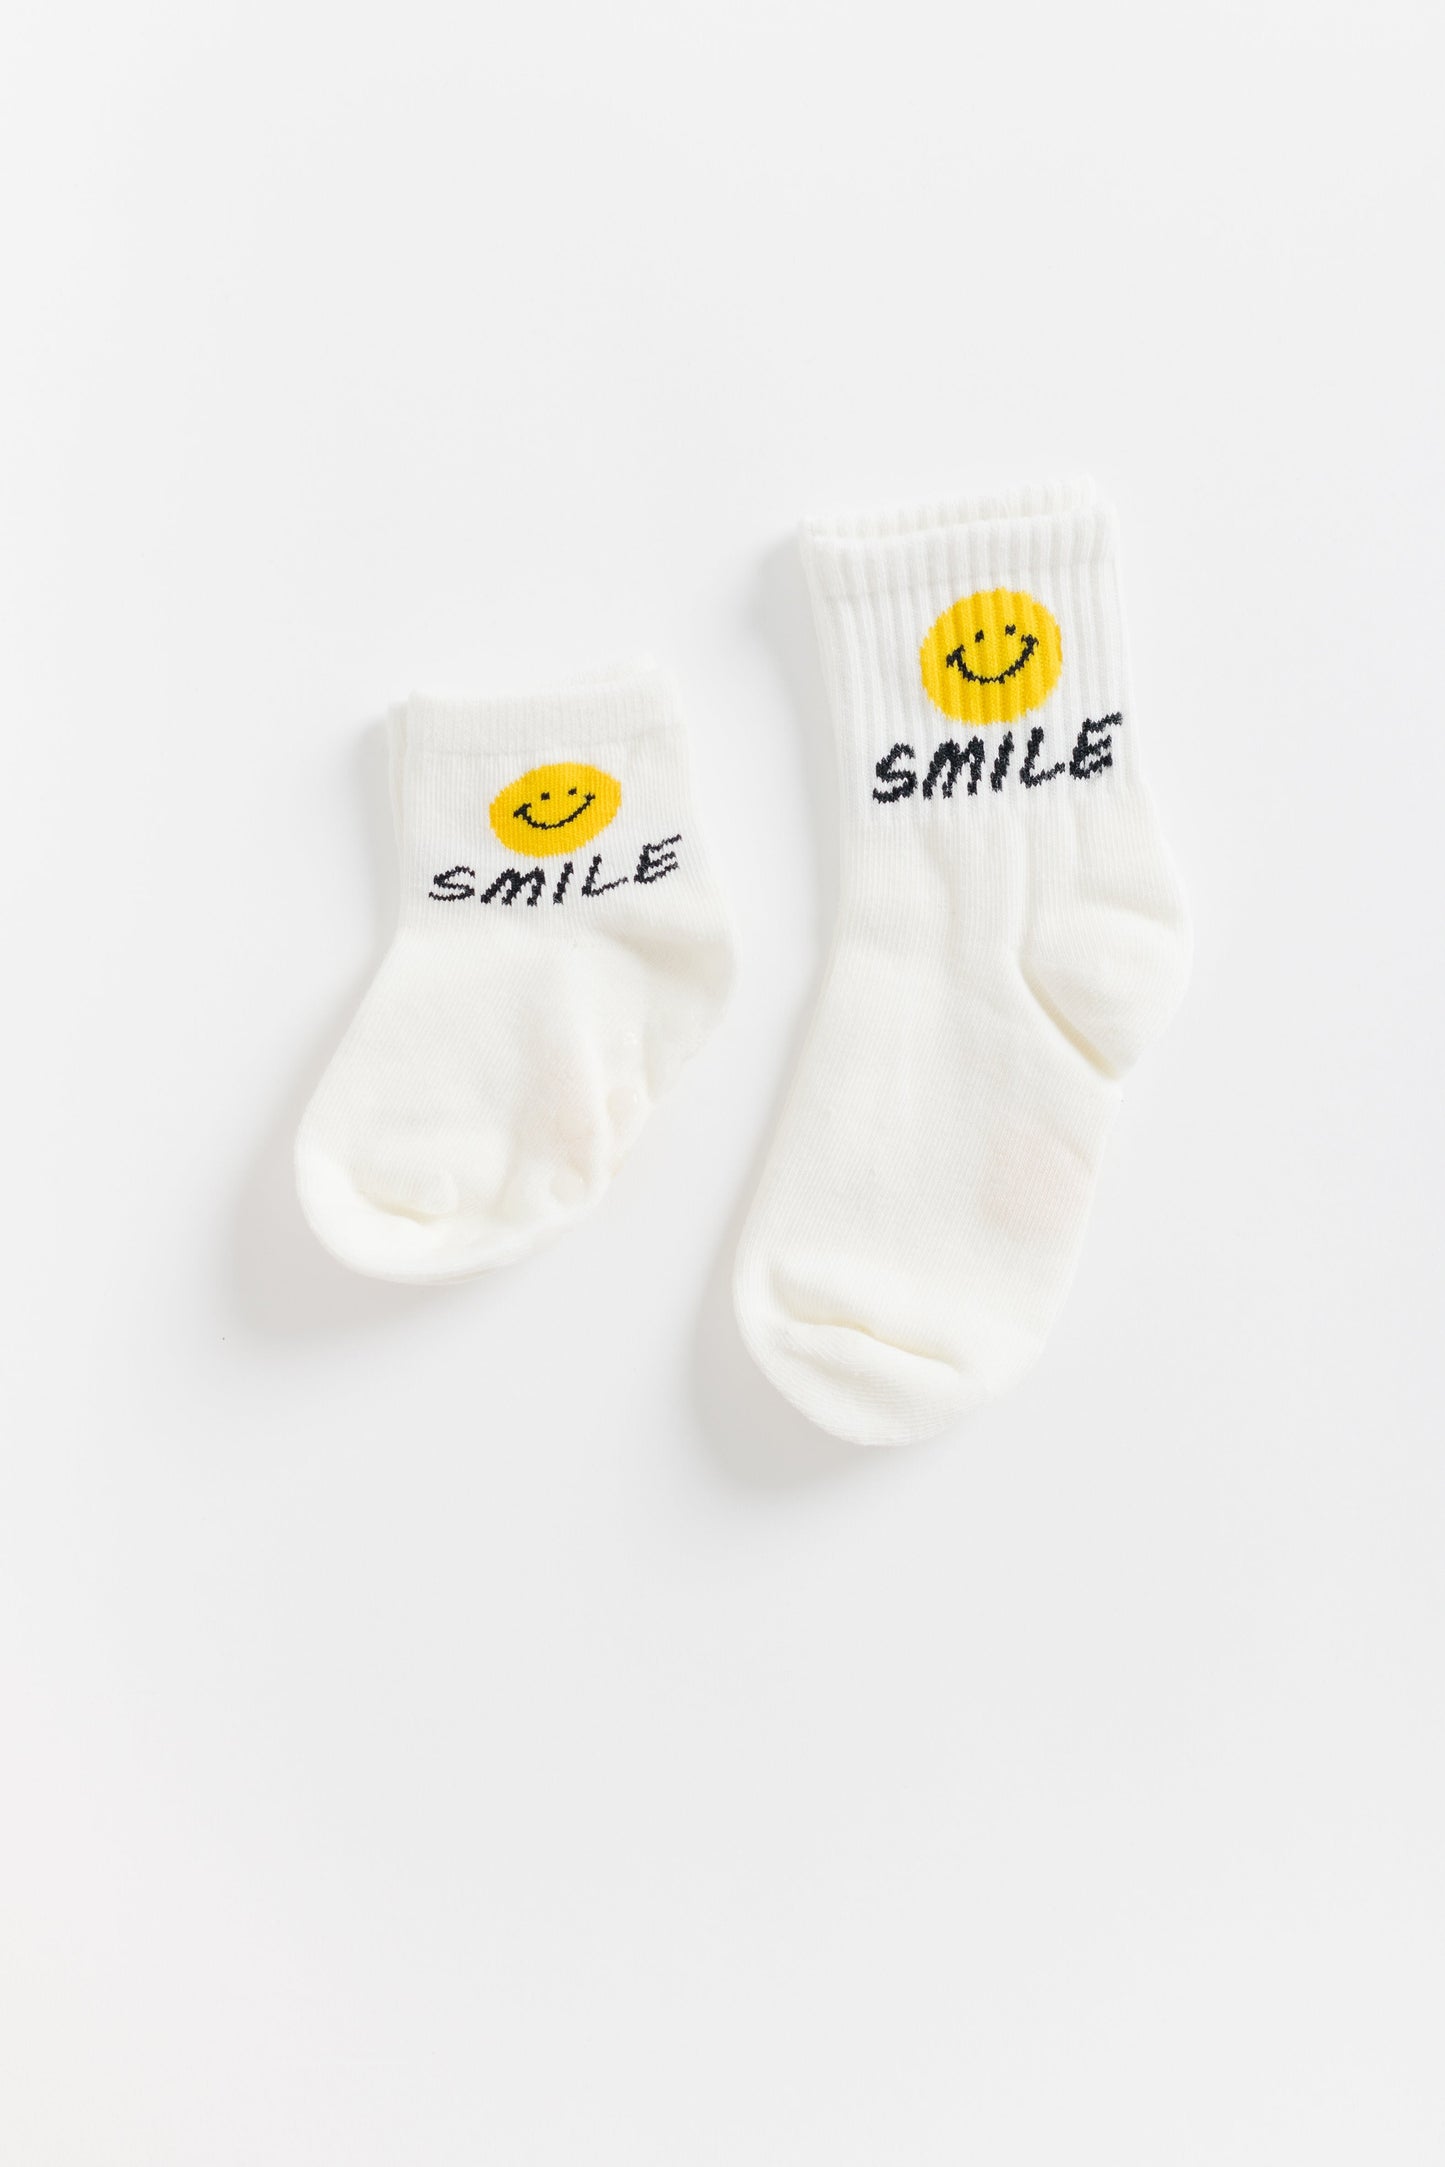 Cove Kids Quarter Smiley Socks KID'S SOCKS Cove Accessories White 0-6 mth 